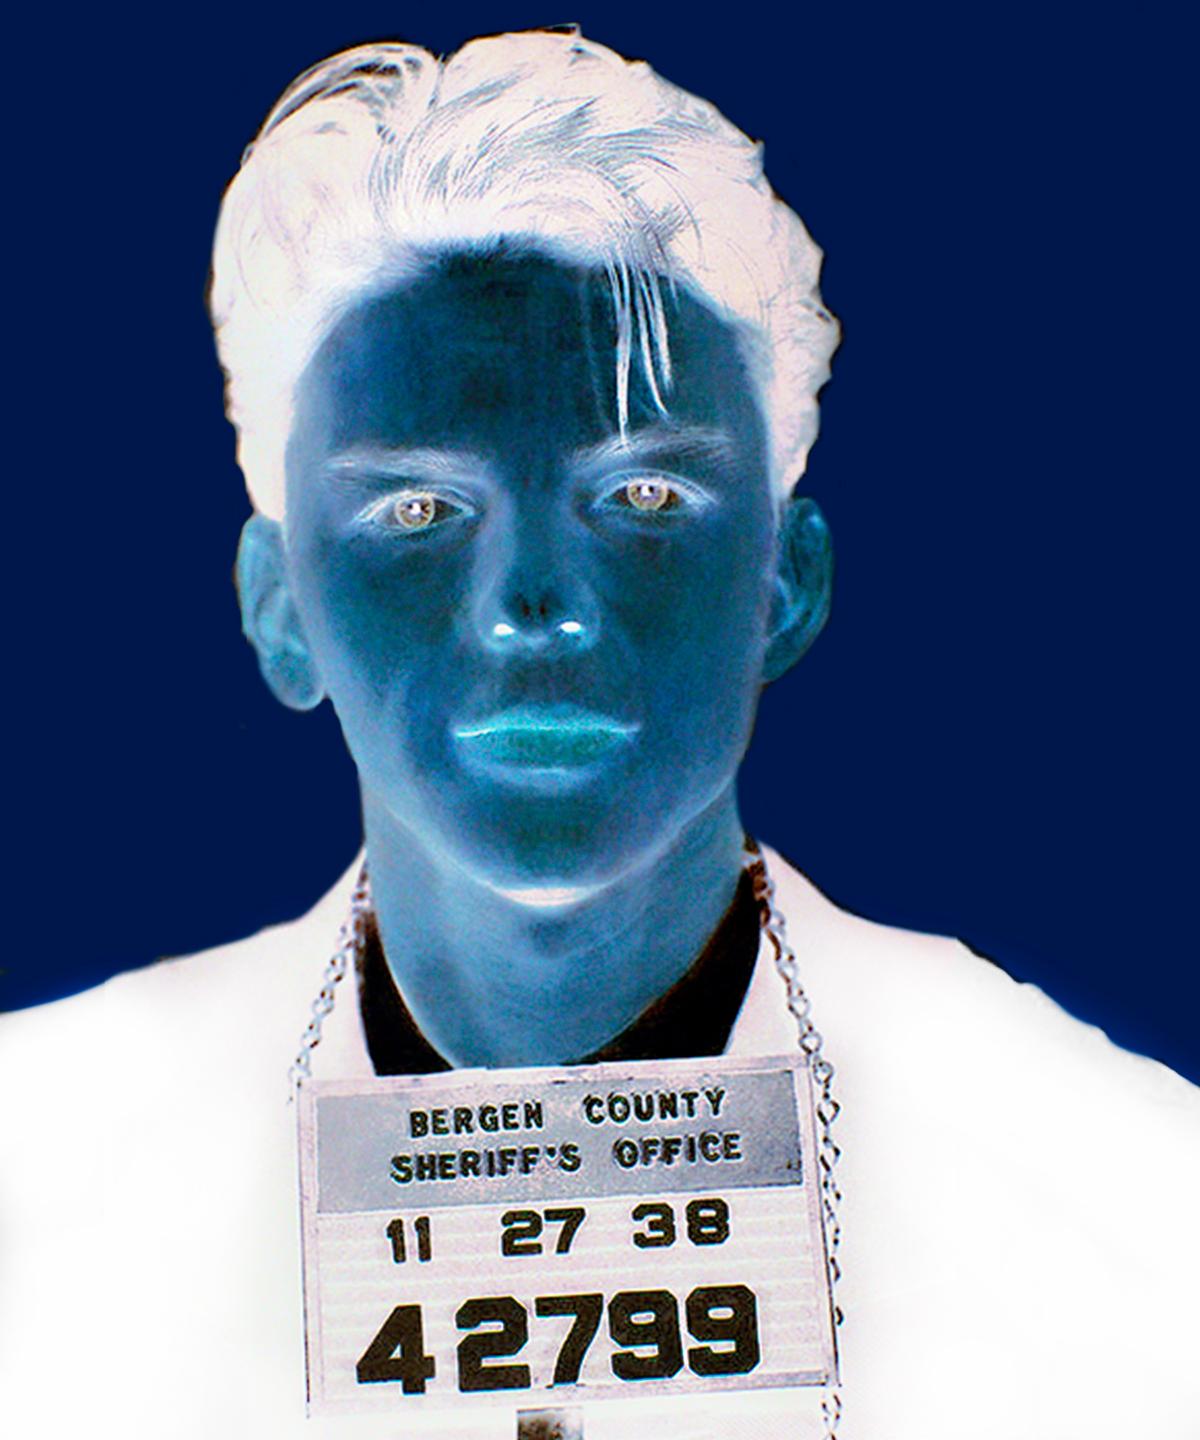 Jeunes yeux bleus  - Pop Art en édition limitée - Frank Sinatra